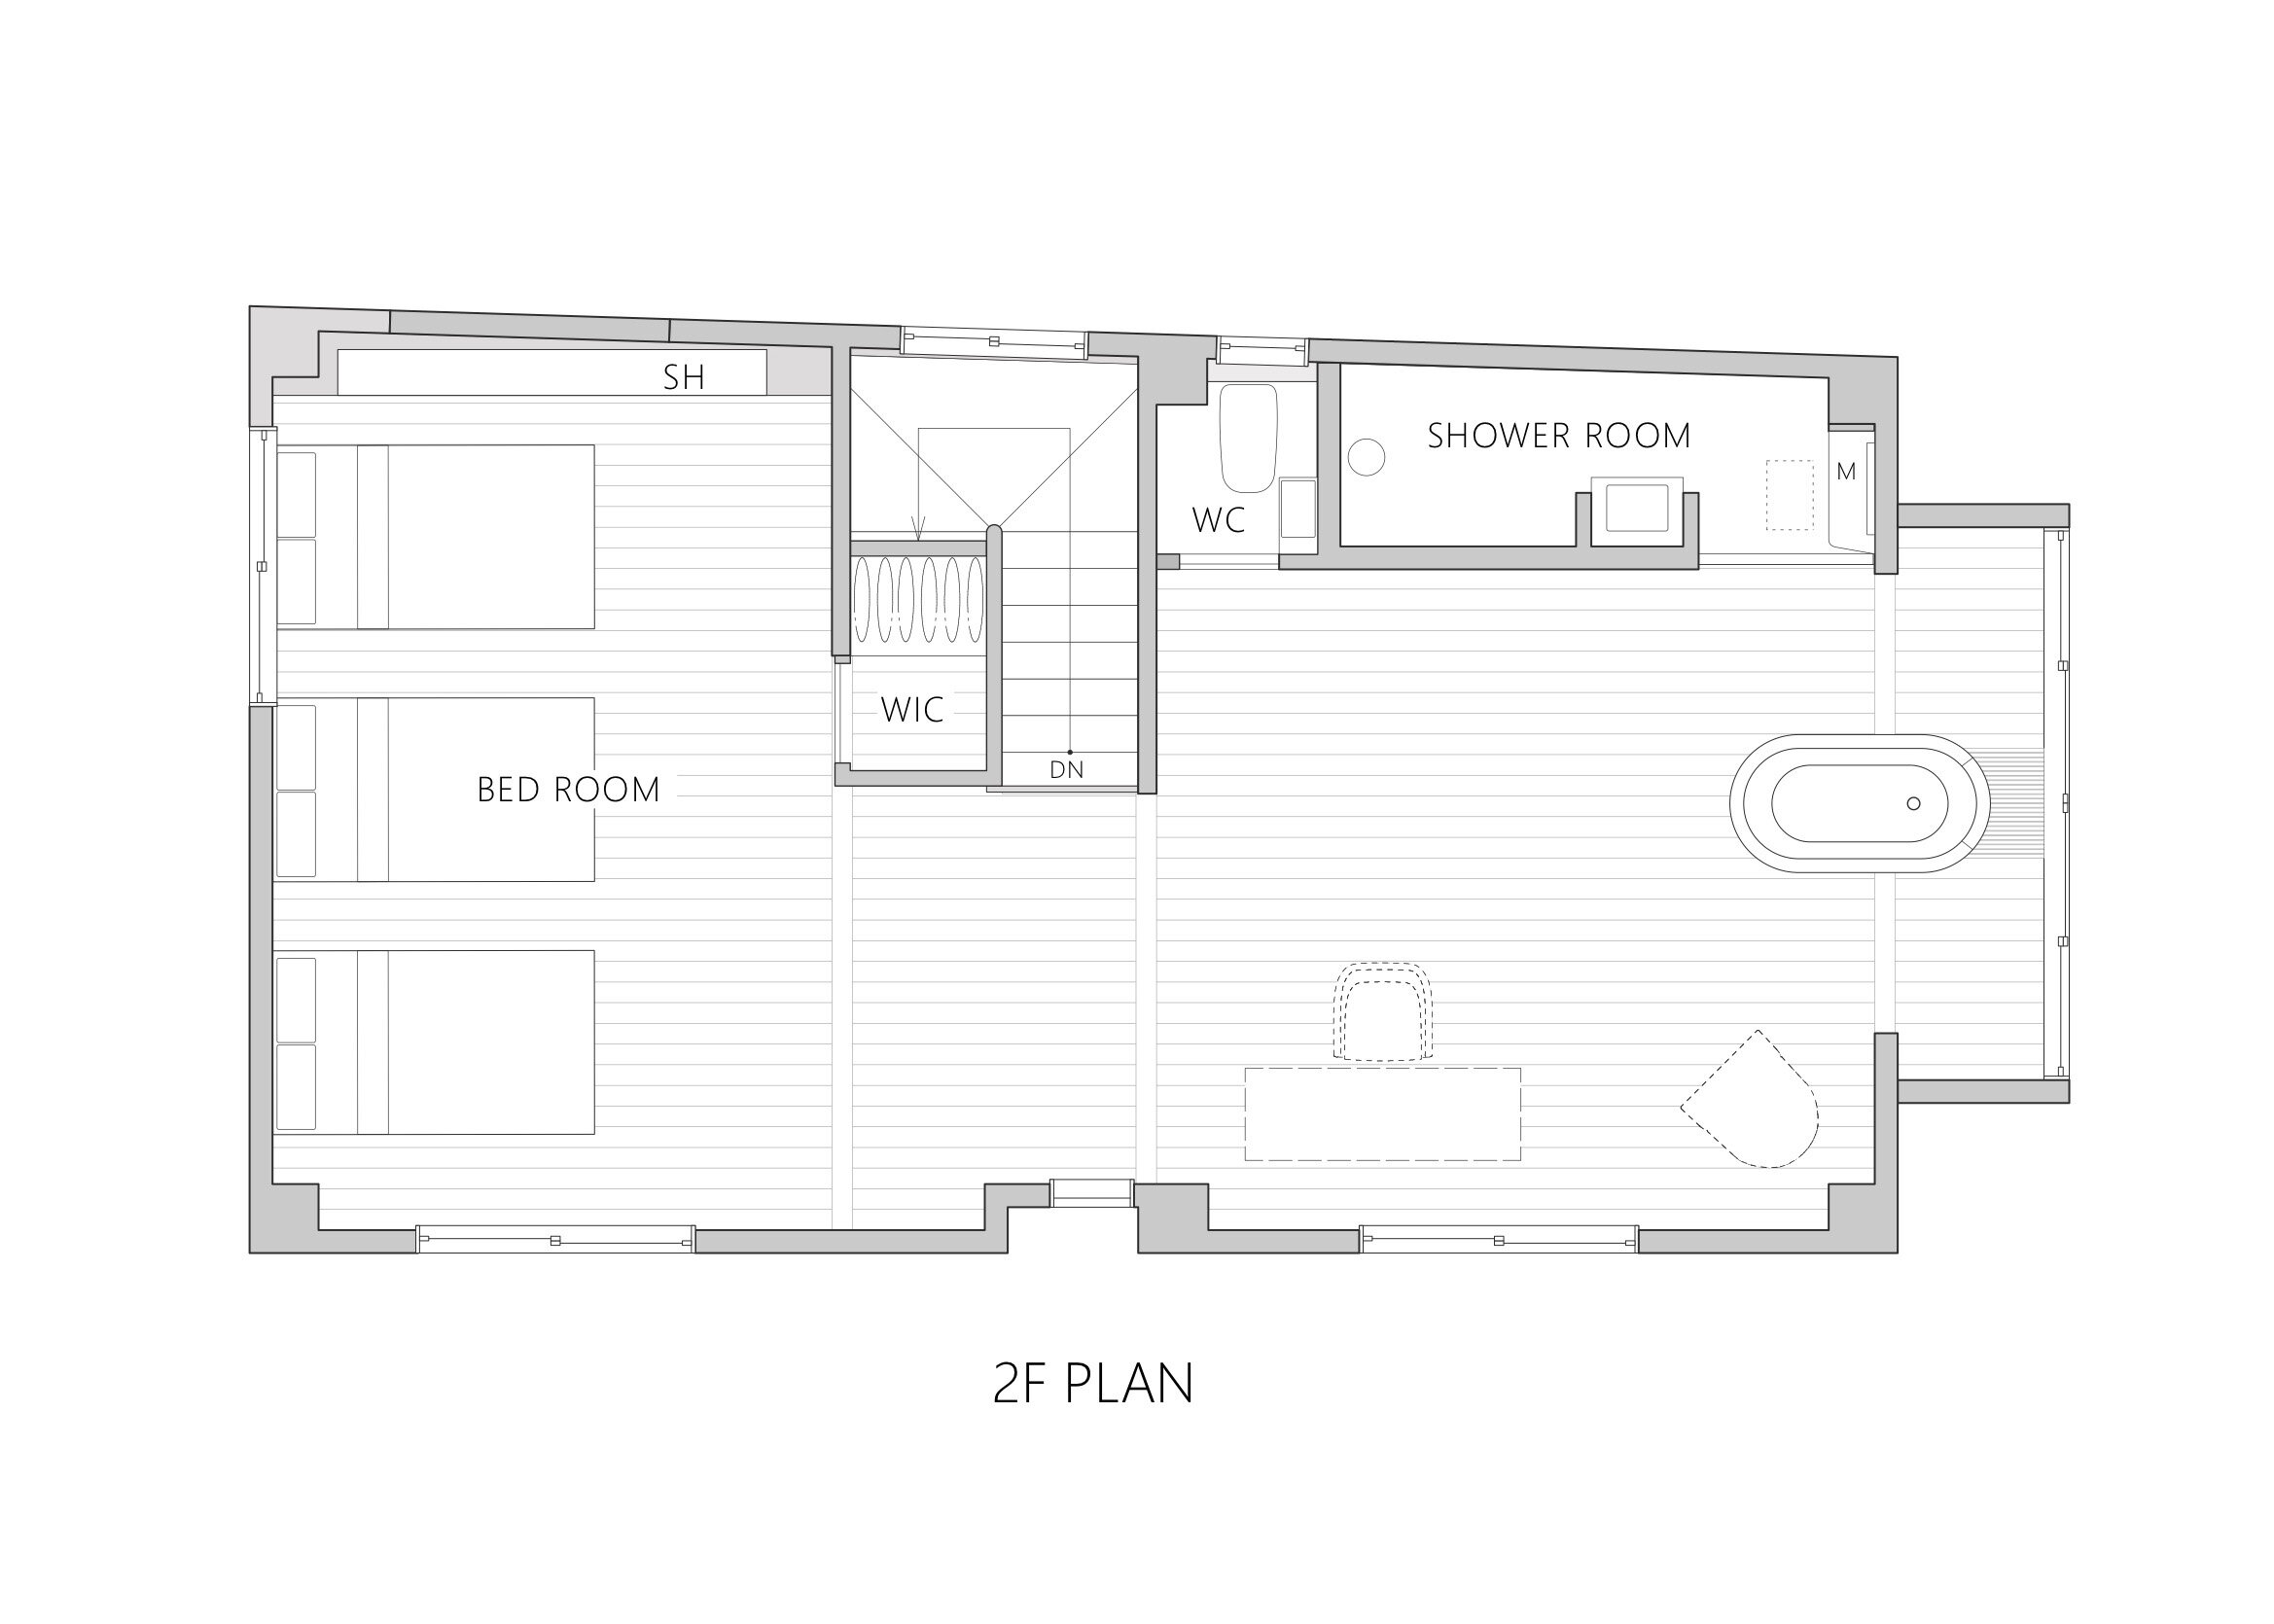  1st floor plan of ISLAND LIVING designed by Hiroyuki Ogura/DRAWERS. 